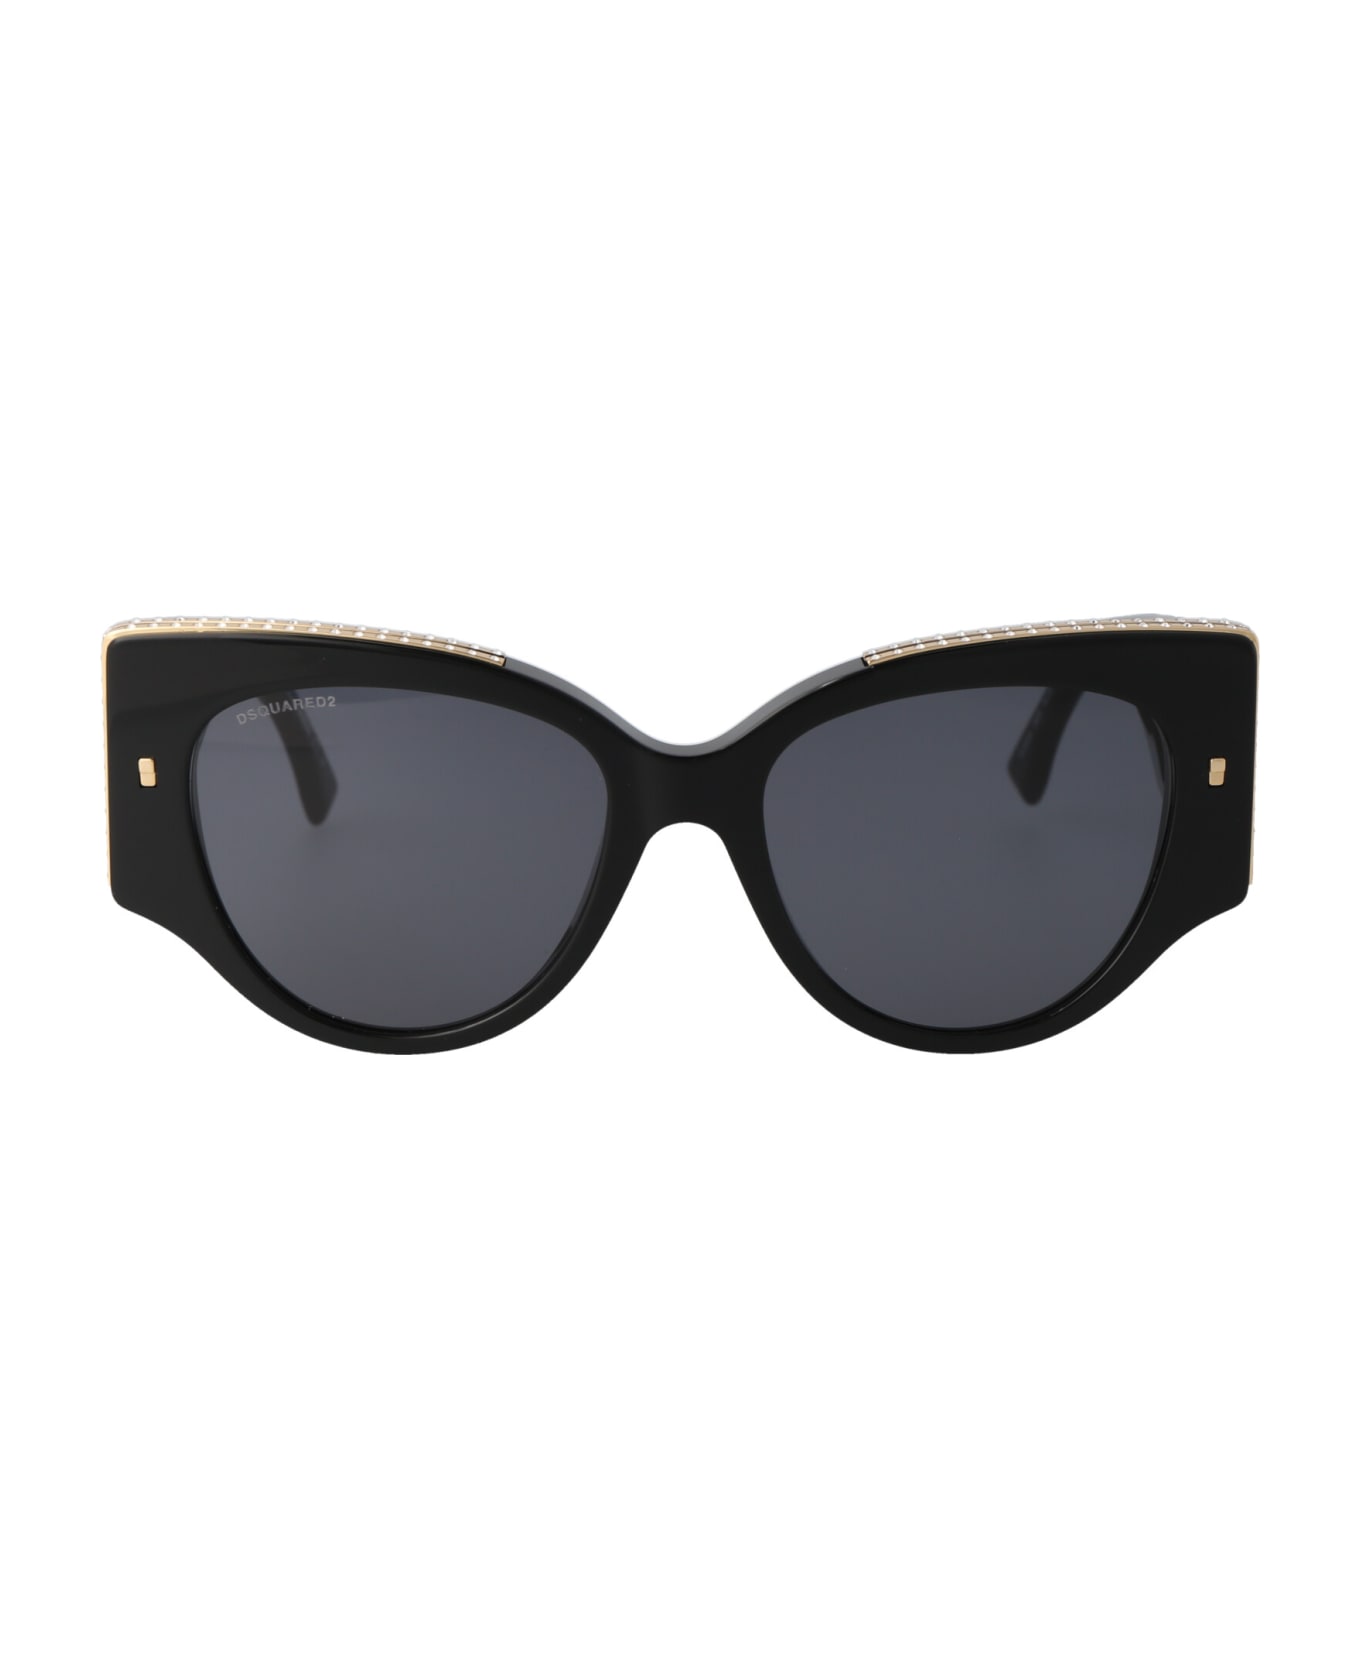 Dsquared2 Eyewear D2 0032/s Sunglasses - 2Feathers and Retro Sunglasses to Valerian Paris Premiere